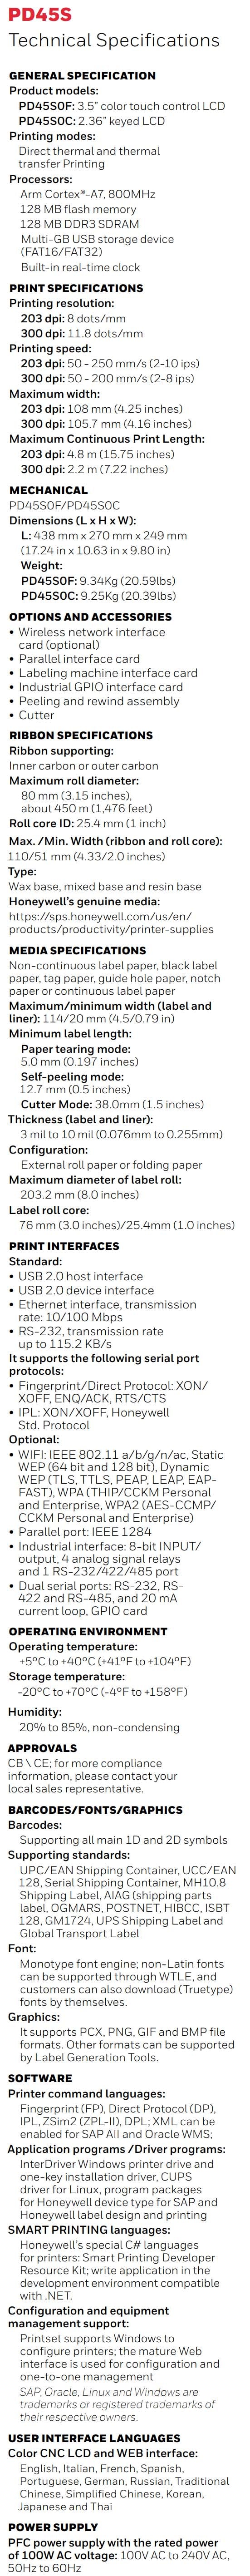 Ficha técnica de la impresora industrial Honeywell PD45S